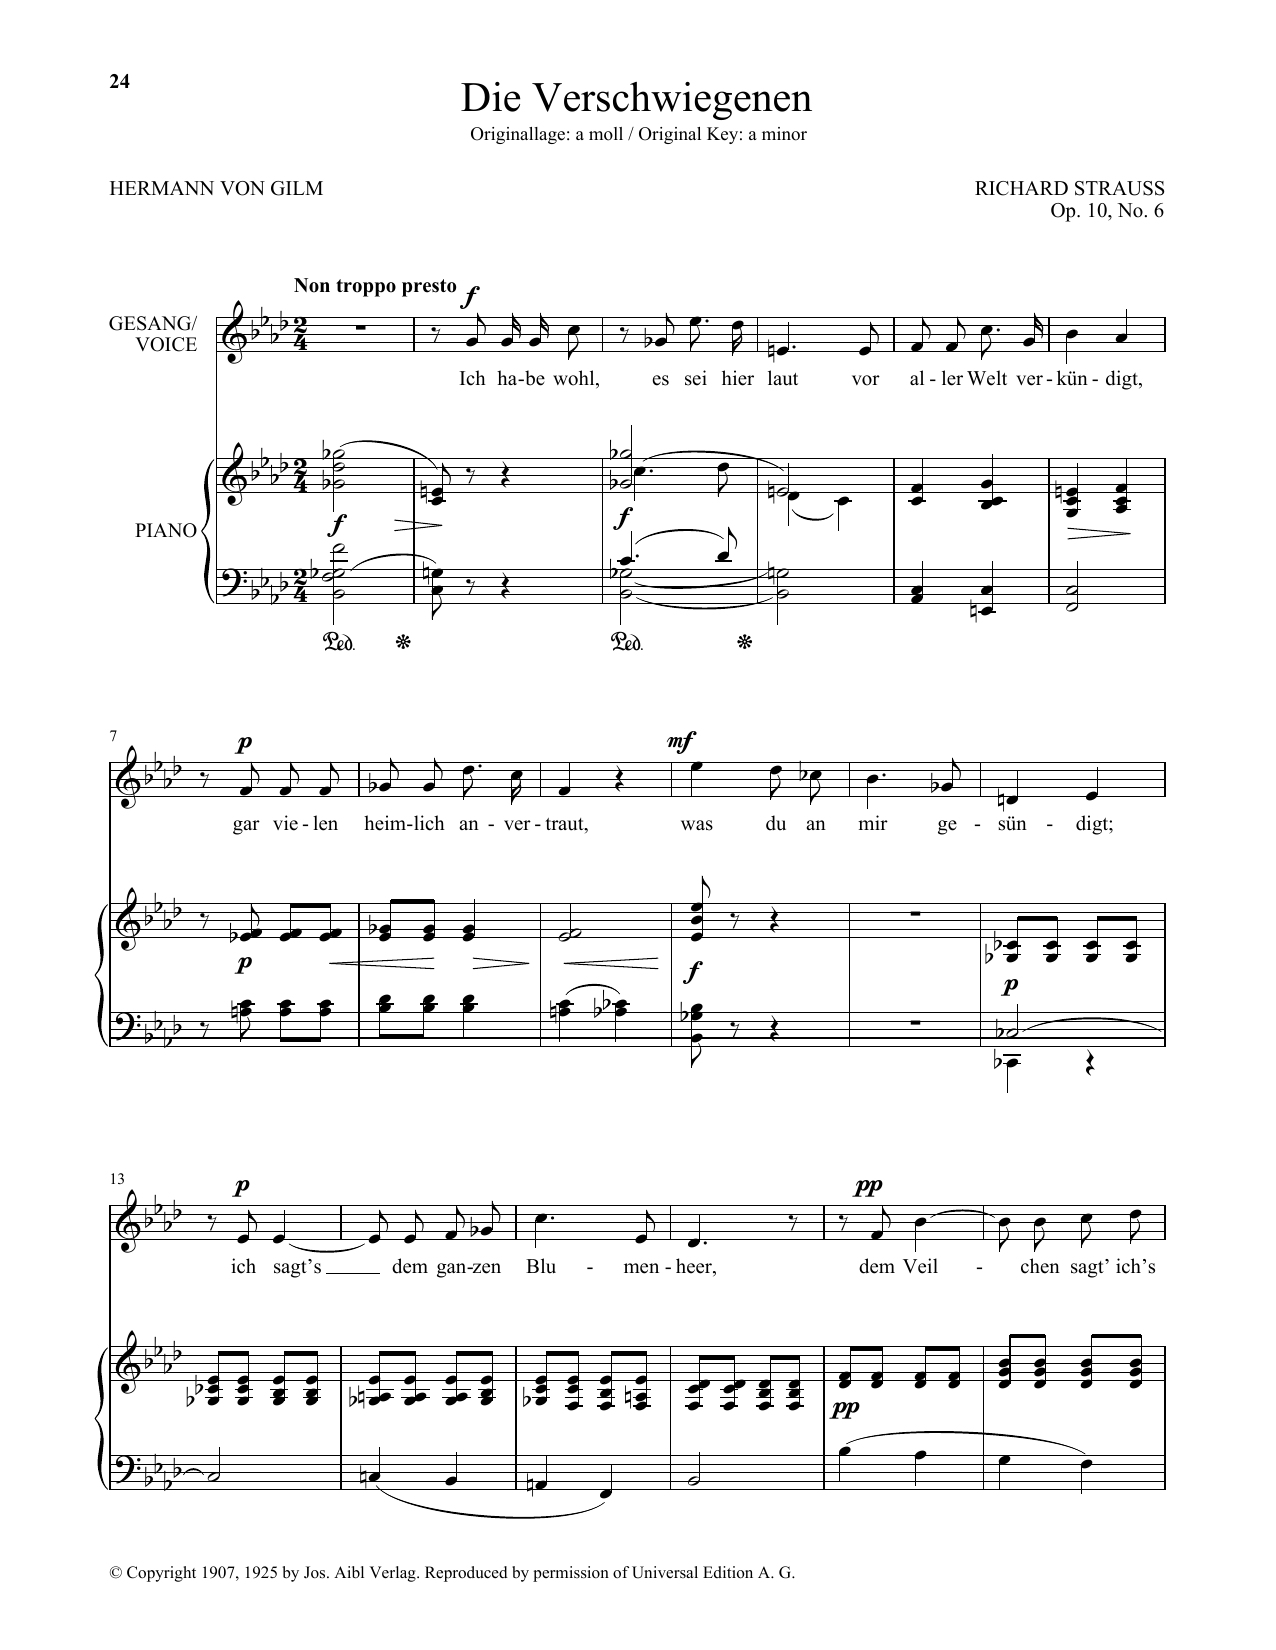 Richard Strauss Die Verschwiegenen (Low Voice) Sheet Music Notes & Chords for Piano & Vocal - Download or Print PDF